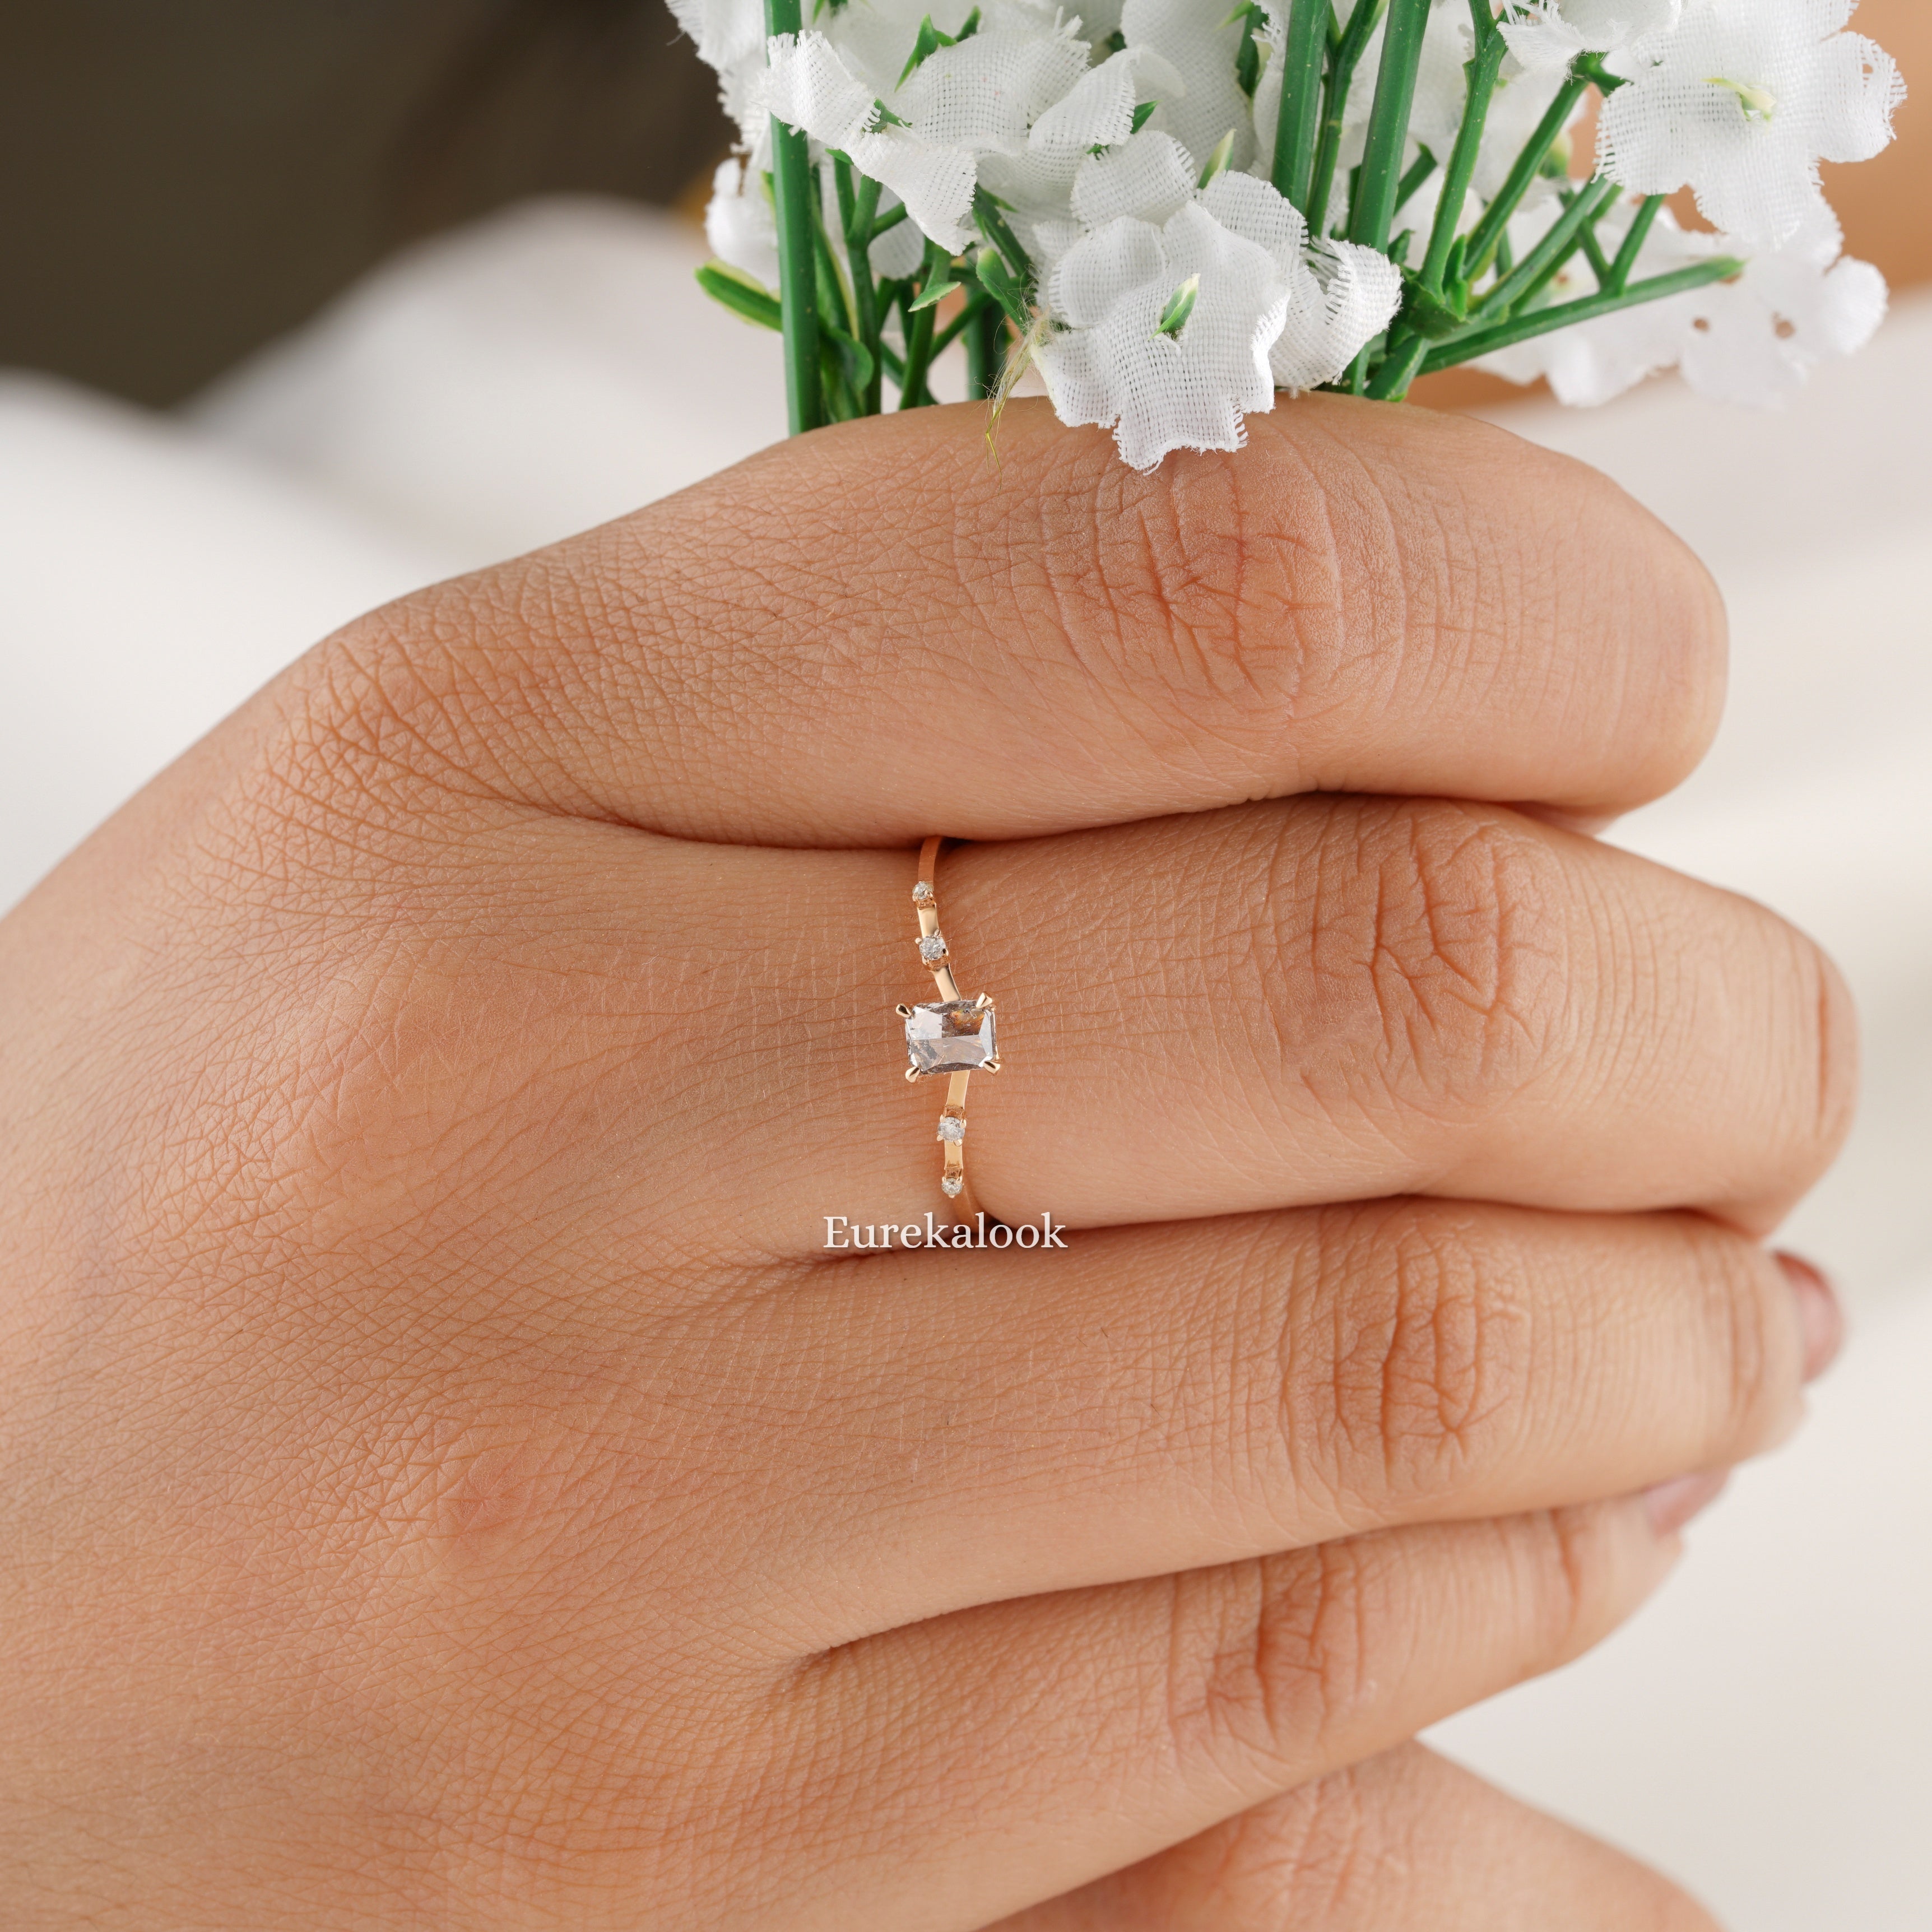 Unique Minimalist Salt and Pepper Diamond Wedding Ring - Eurekalook